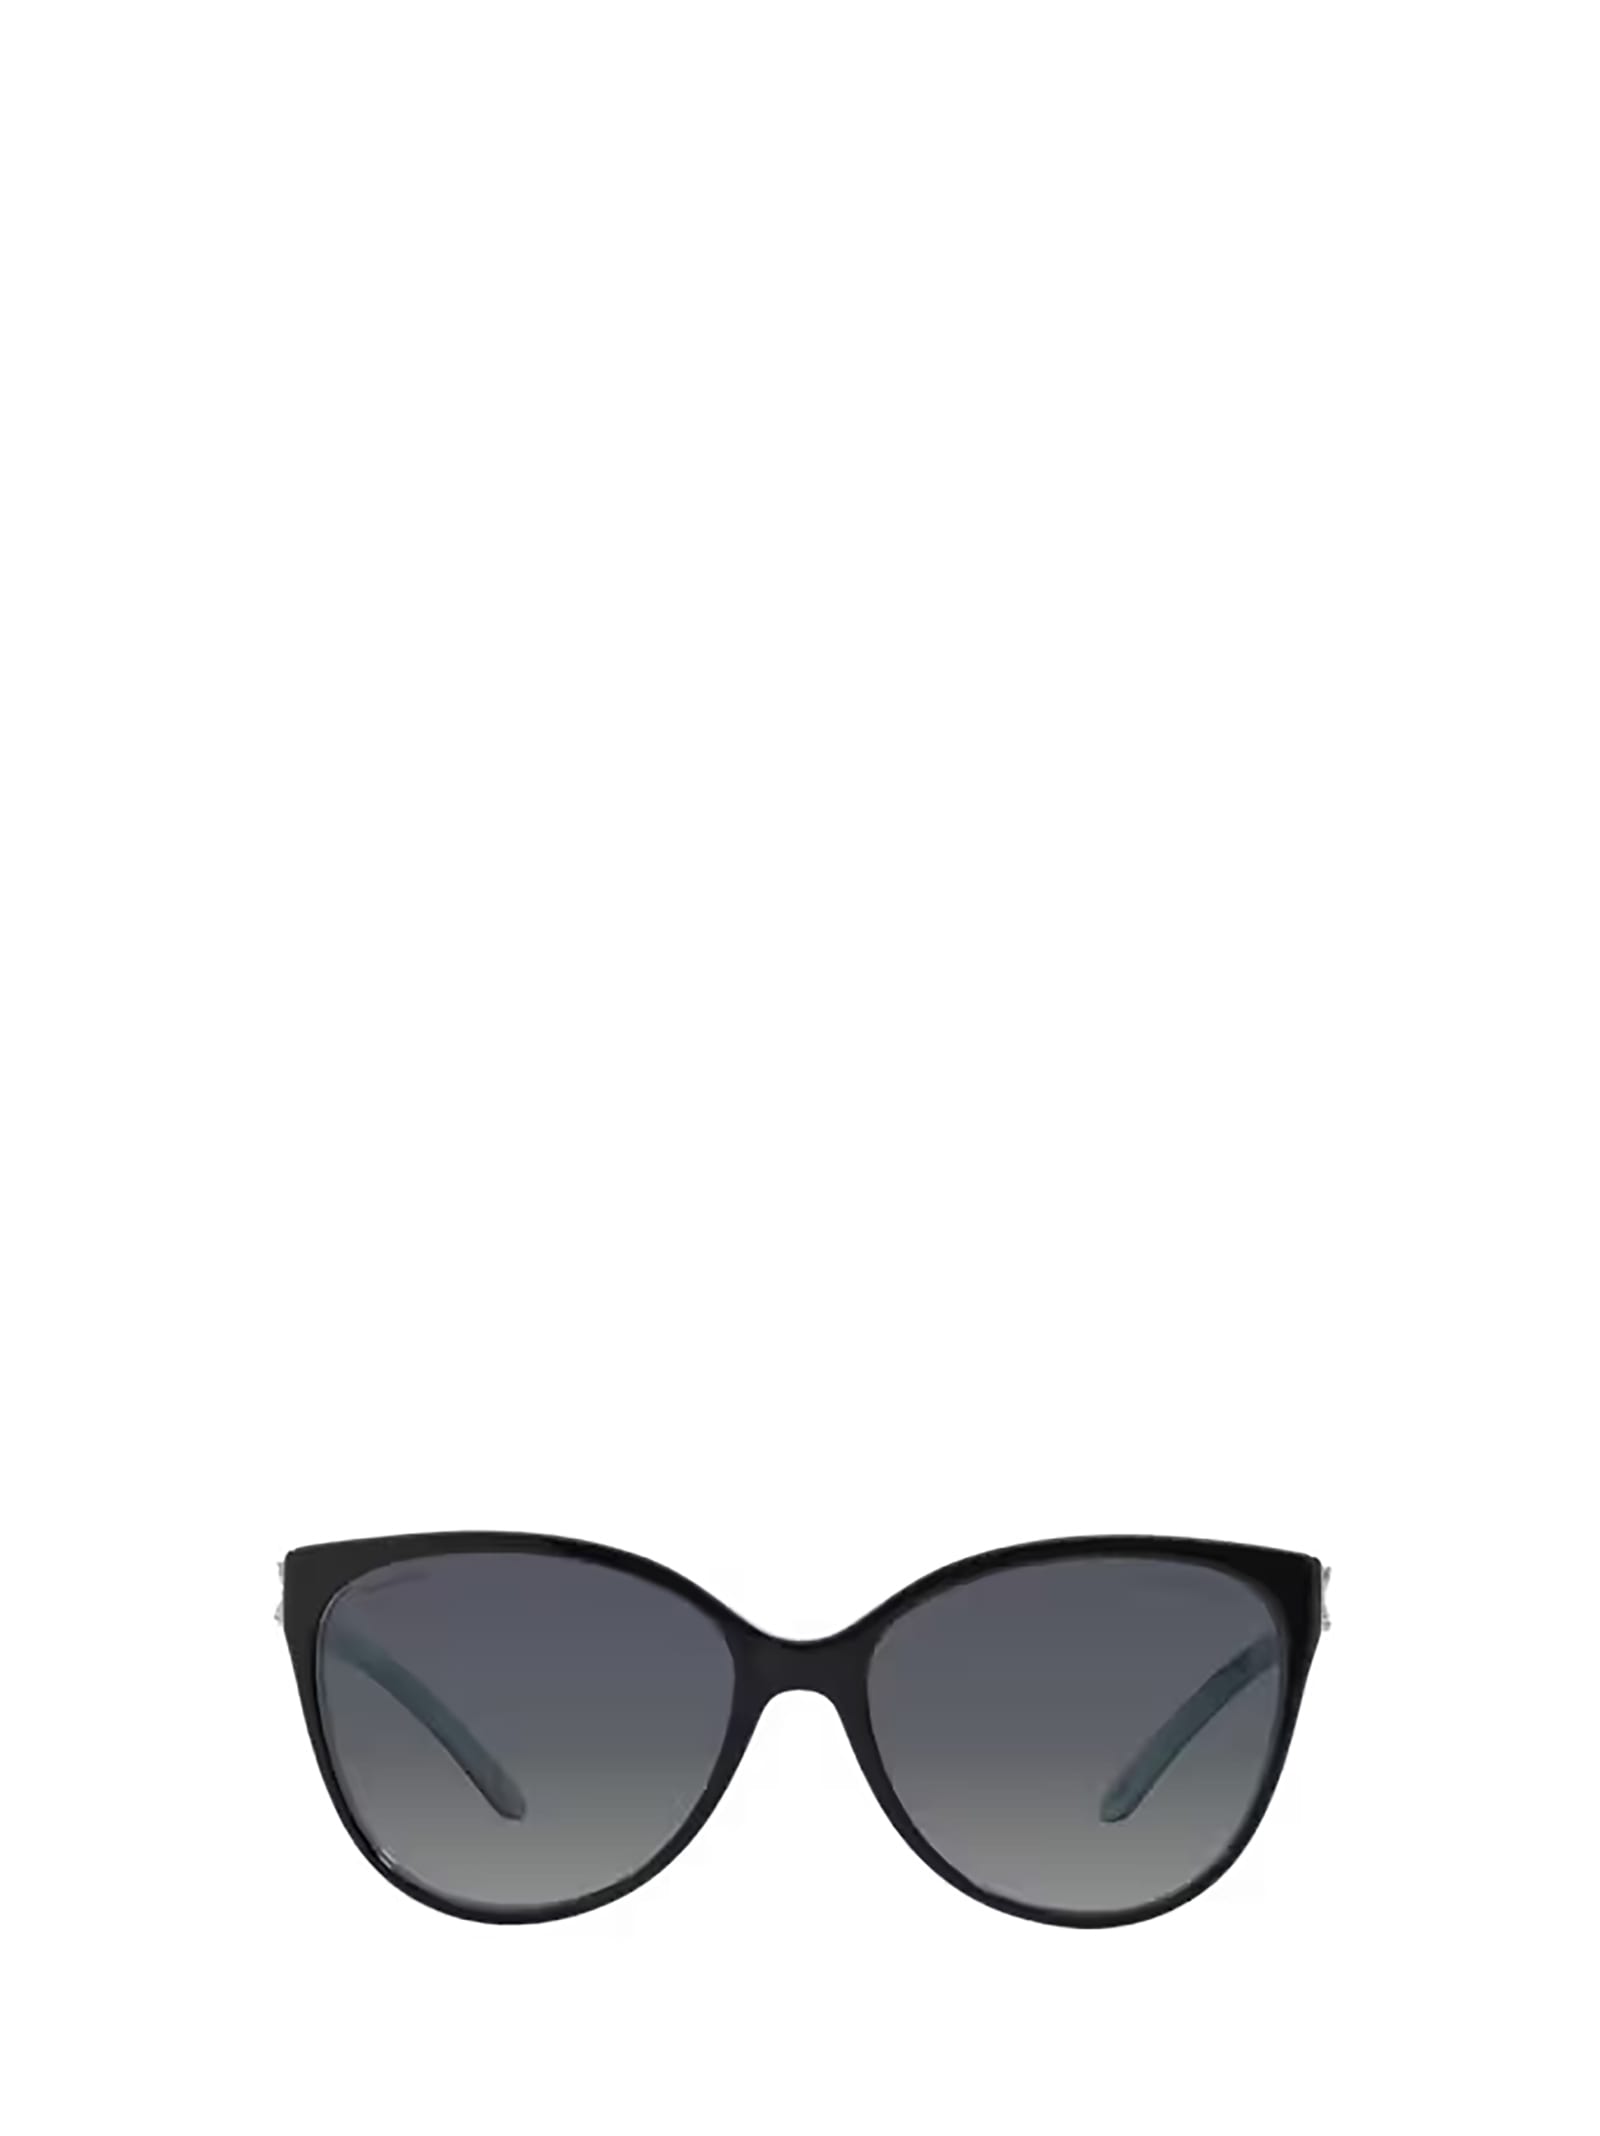 Tf4089b Black On Tiffany Blue Sunglasses